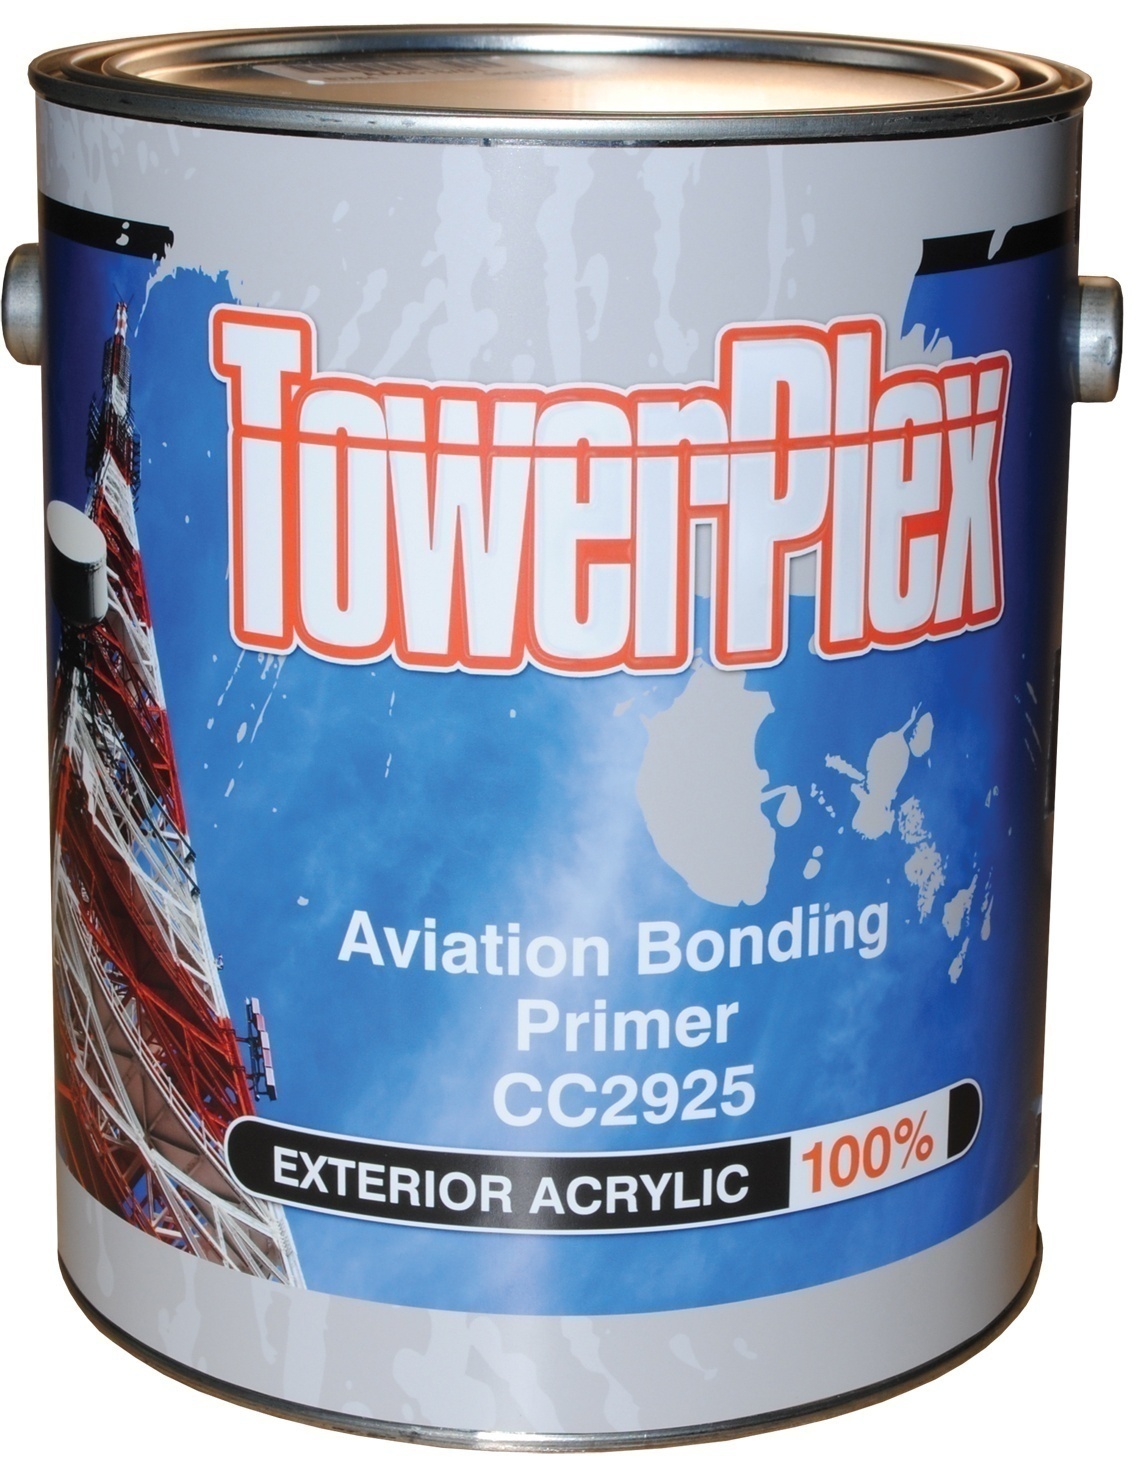 CC2925 TowerPlex Acrylic Bonding Primer (1 Gallon Pail) from GME Supply